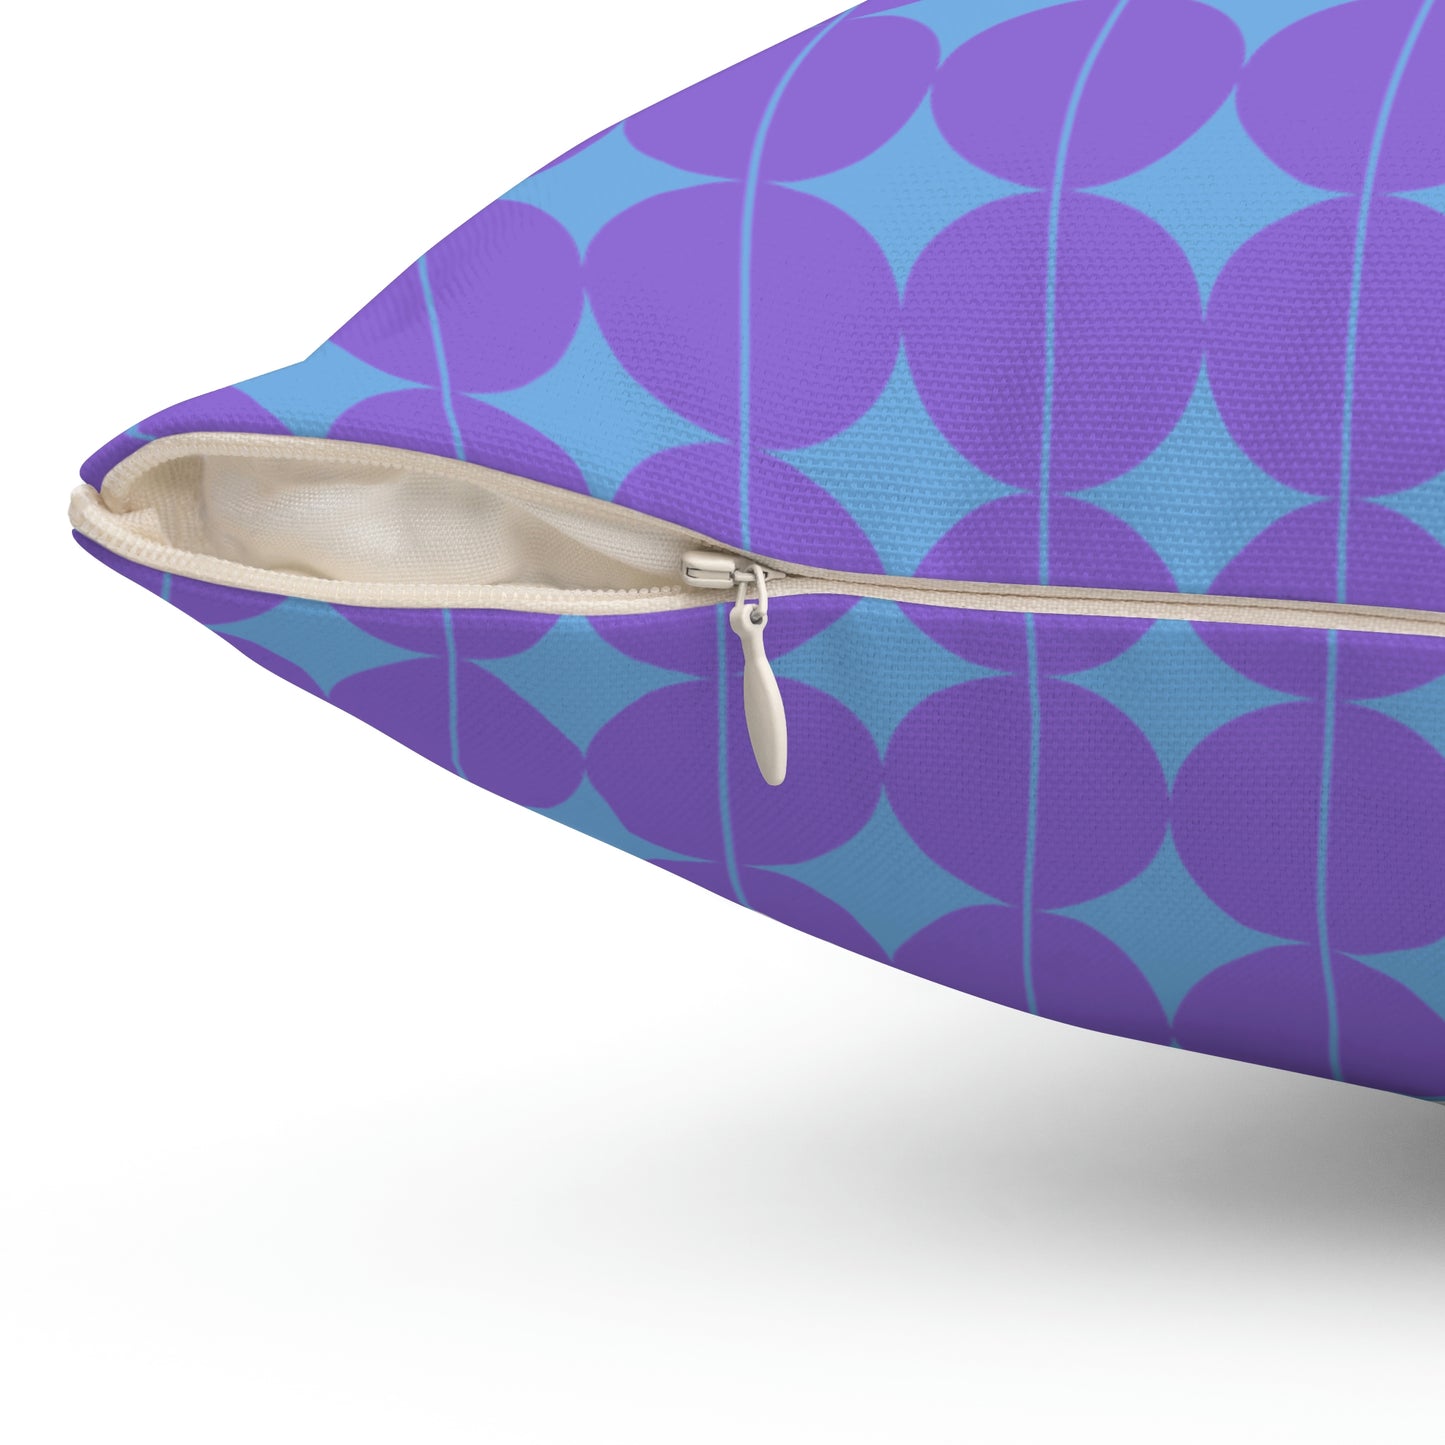 Spun Polyester Square Pillow Case "Purple Semicircle on Light Blue”